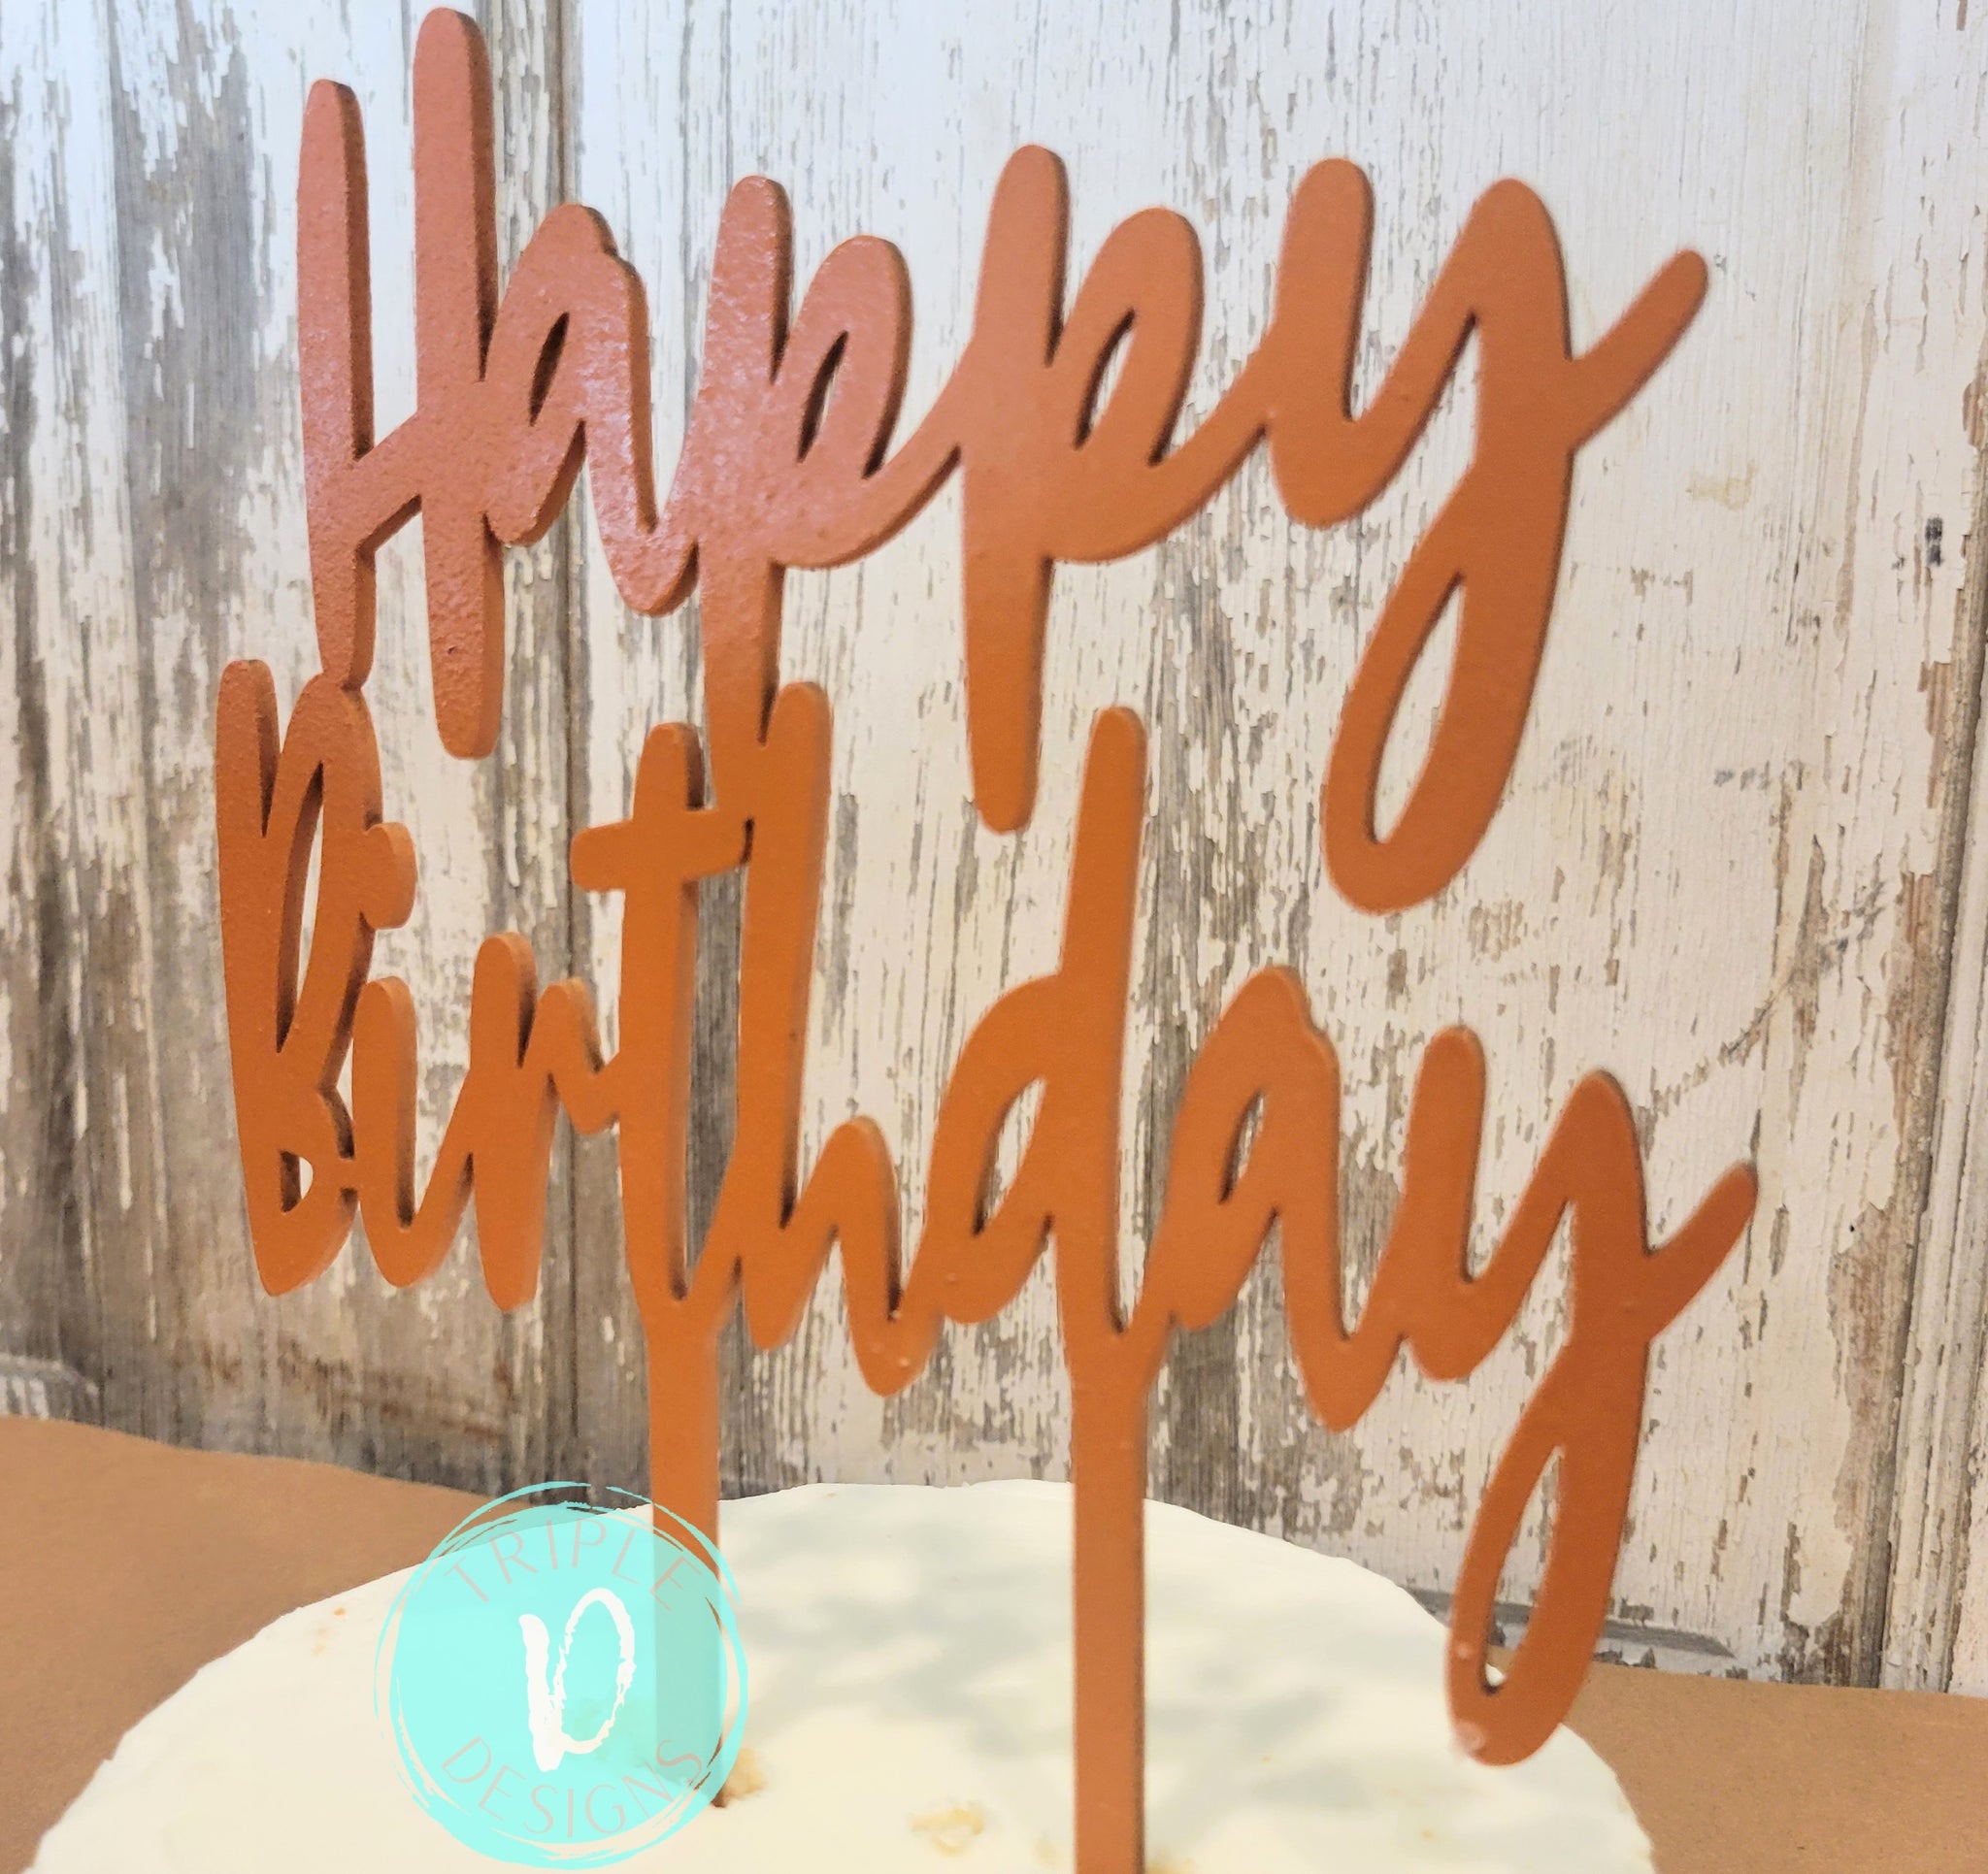 Happy Birthday Cake Topper - Script Text